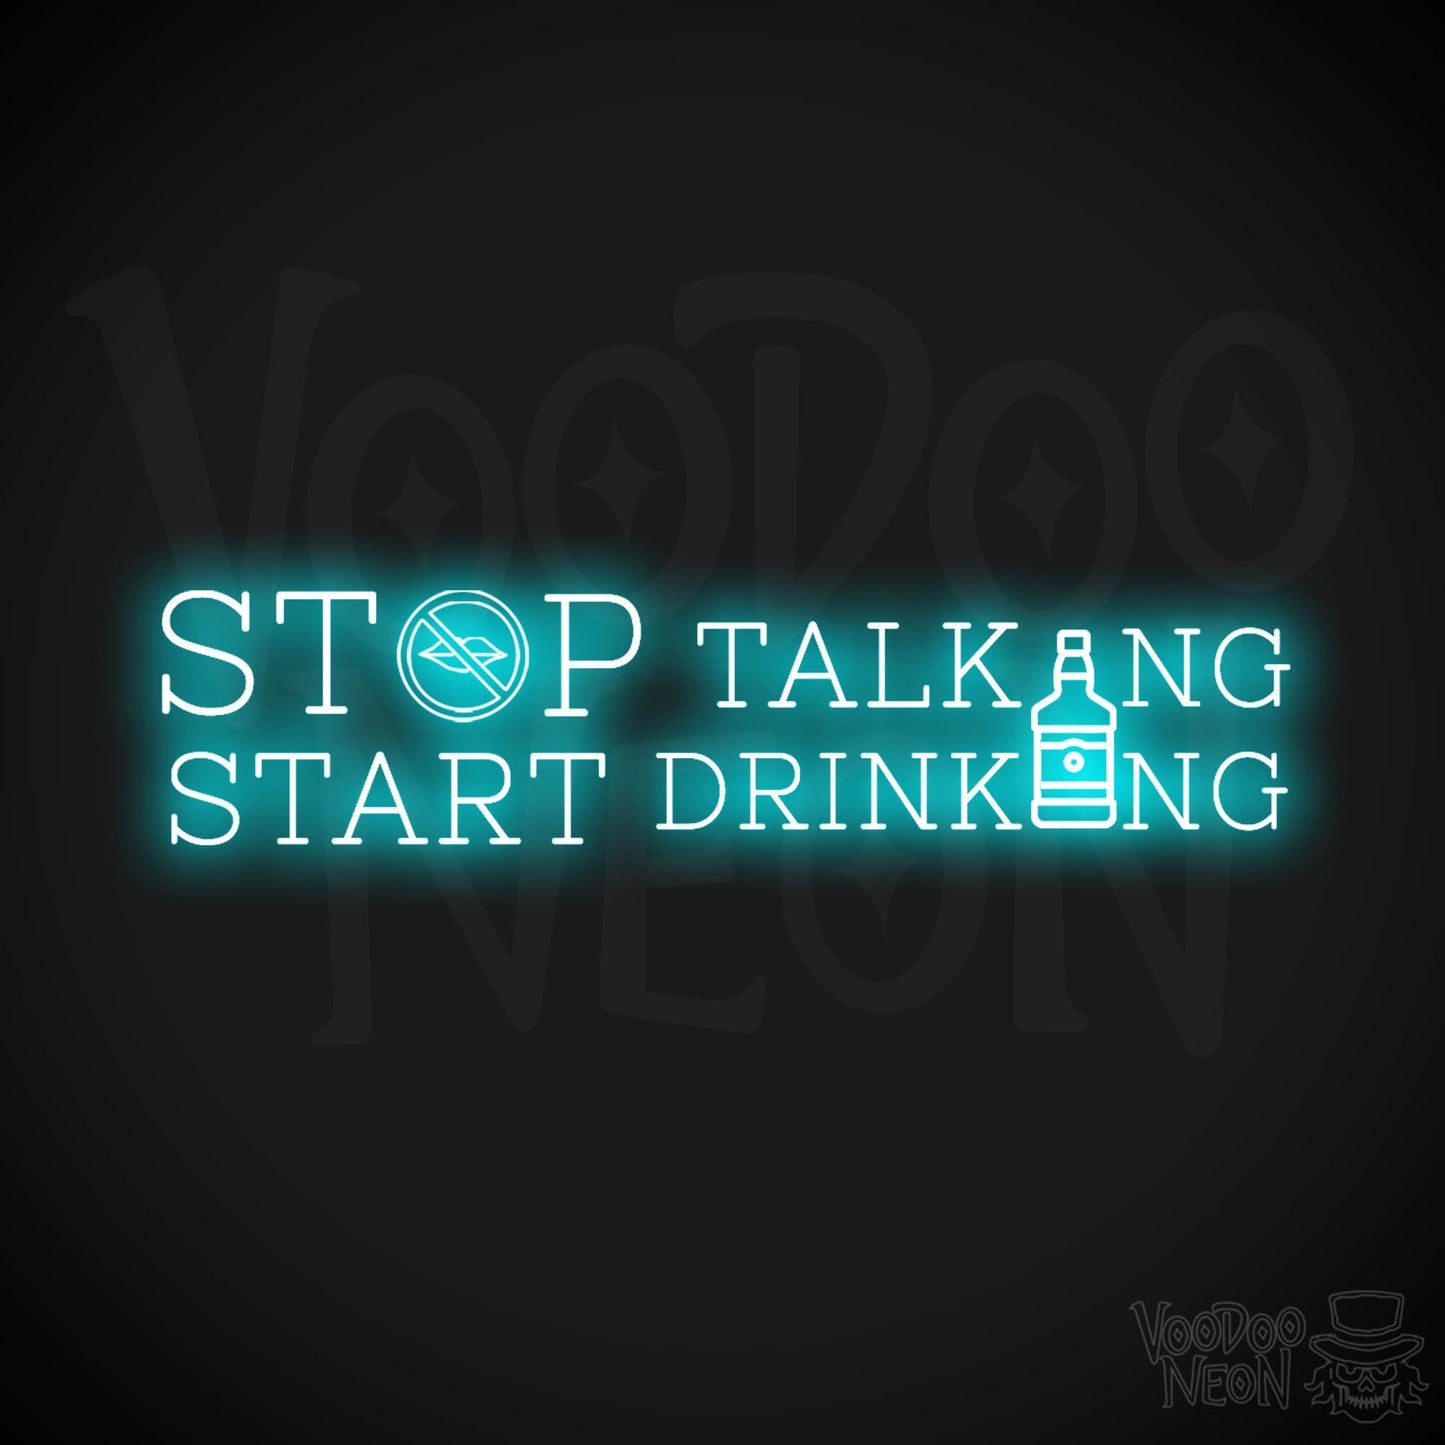 Stop Talking Start Drinking Neon Sign - Stop Talking Start Drinking Sign - Color Ice Blue